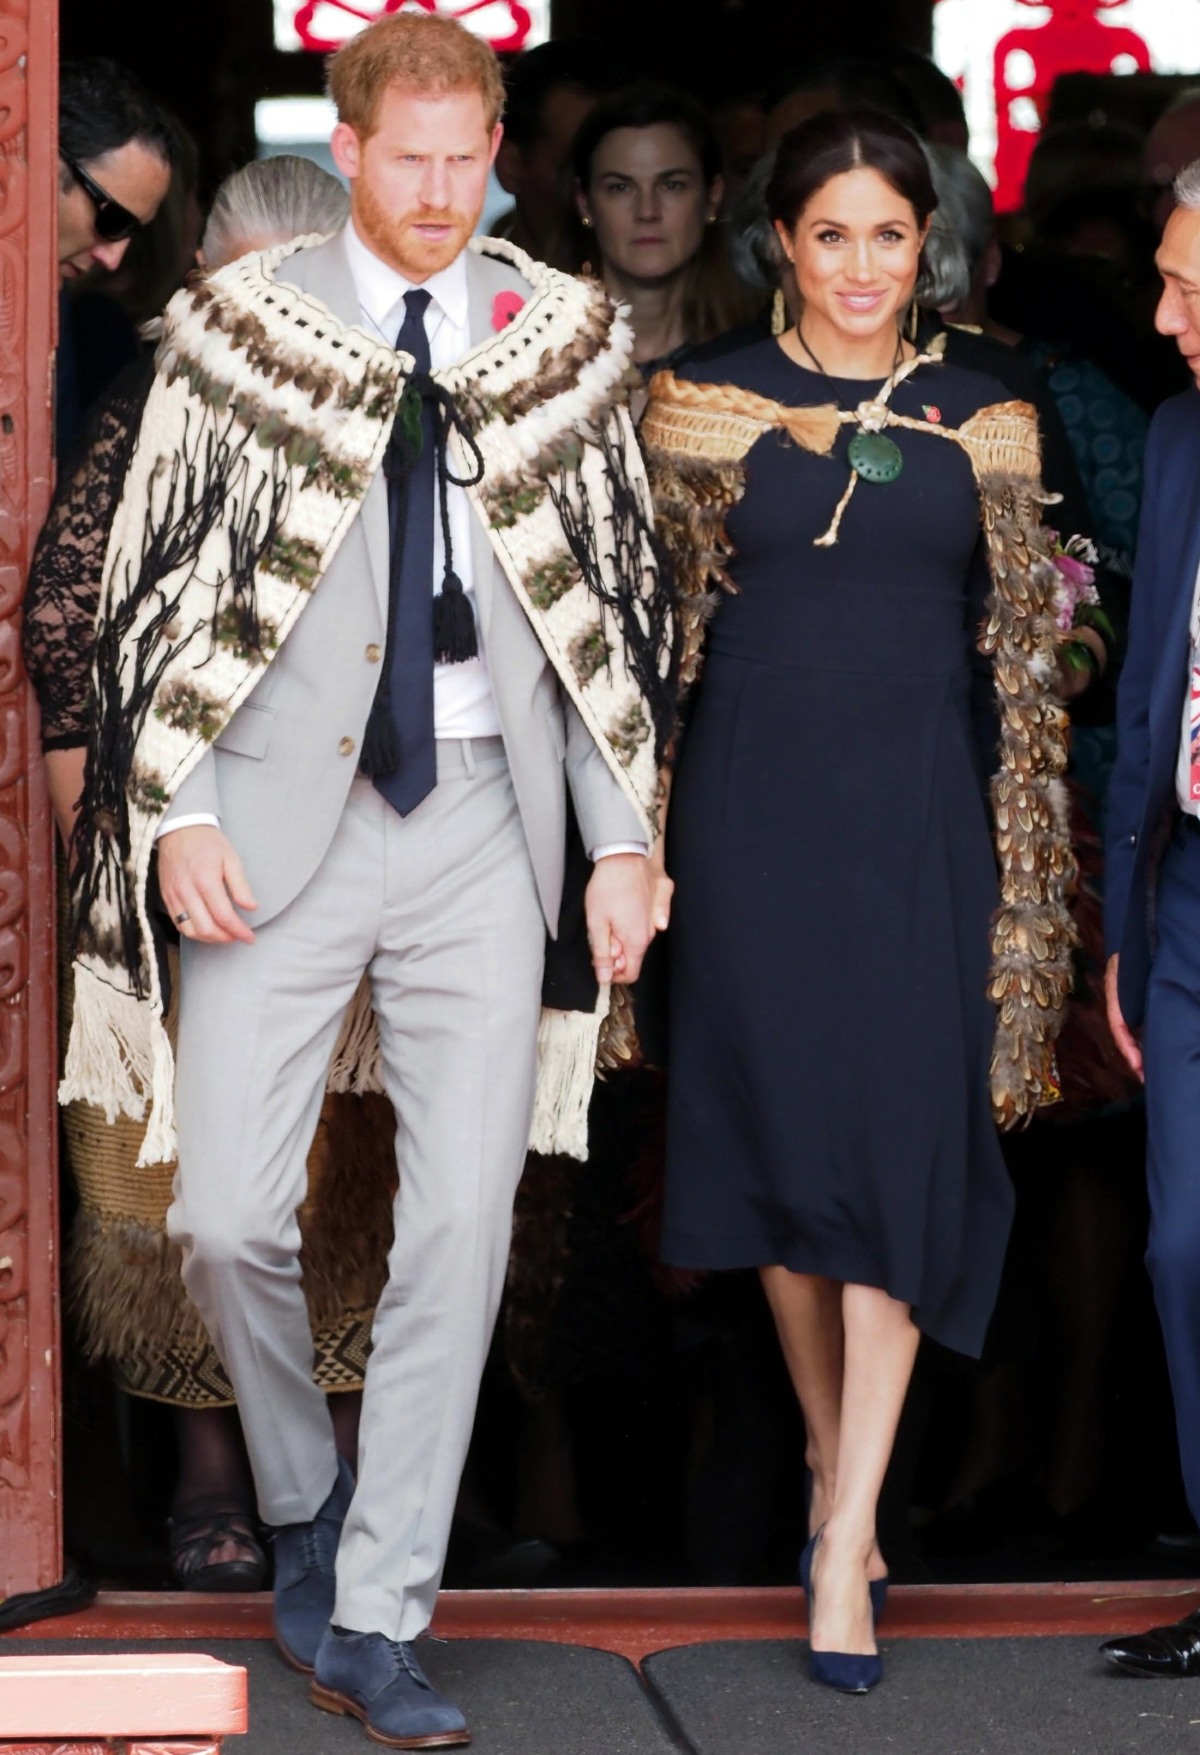 The Duke and Duchess of Sussex visit Te Papaiouru Marae in Rotorua, New Zealand